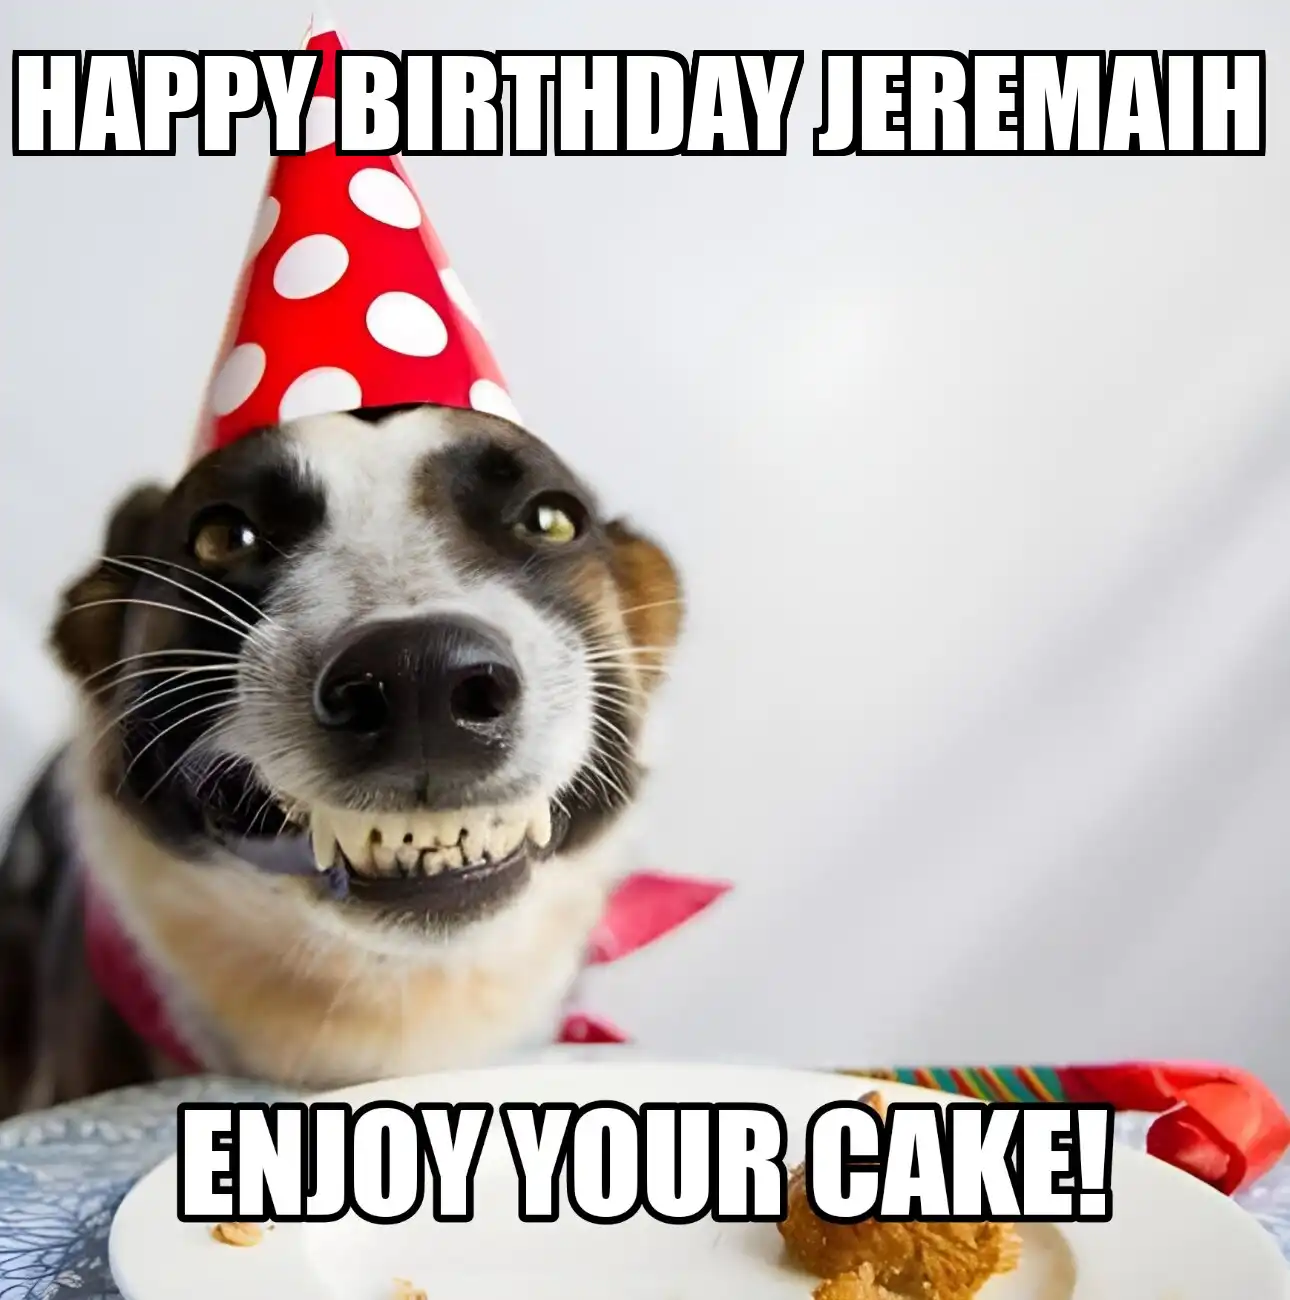 Happy Birthday Jeremaih Enjoy Your Cake Dog Meme